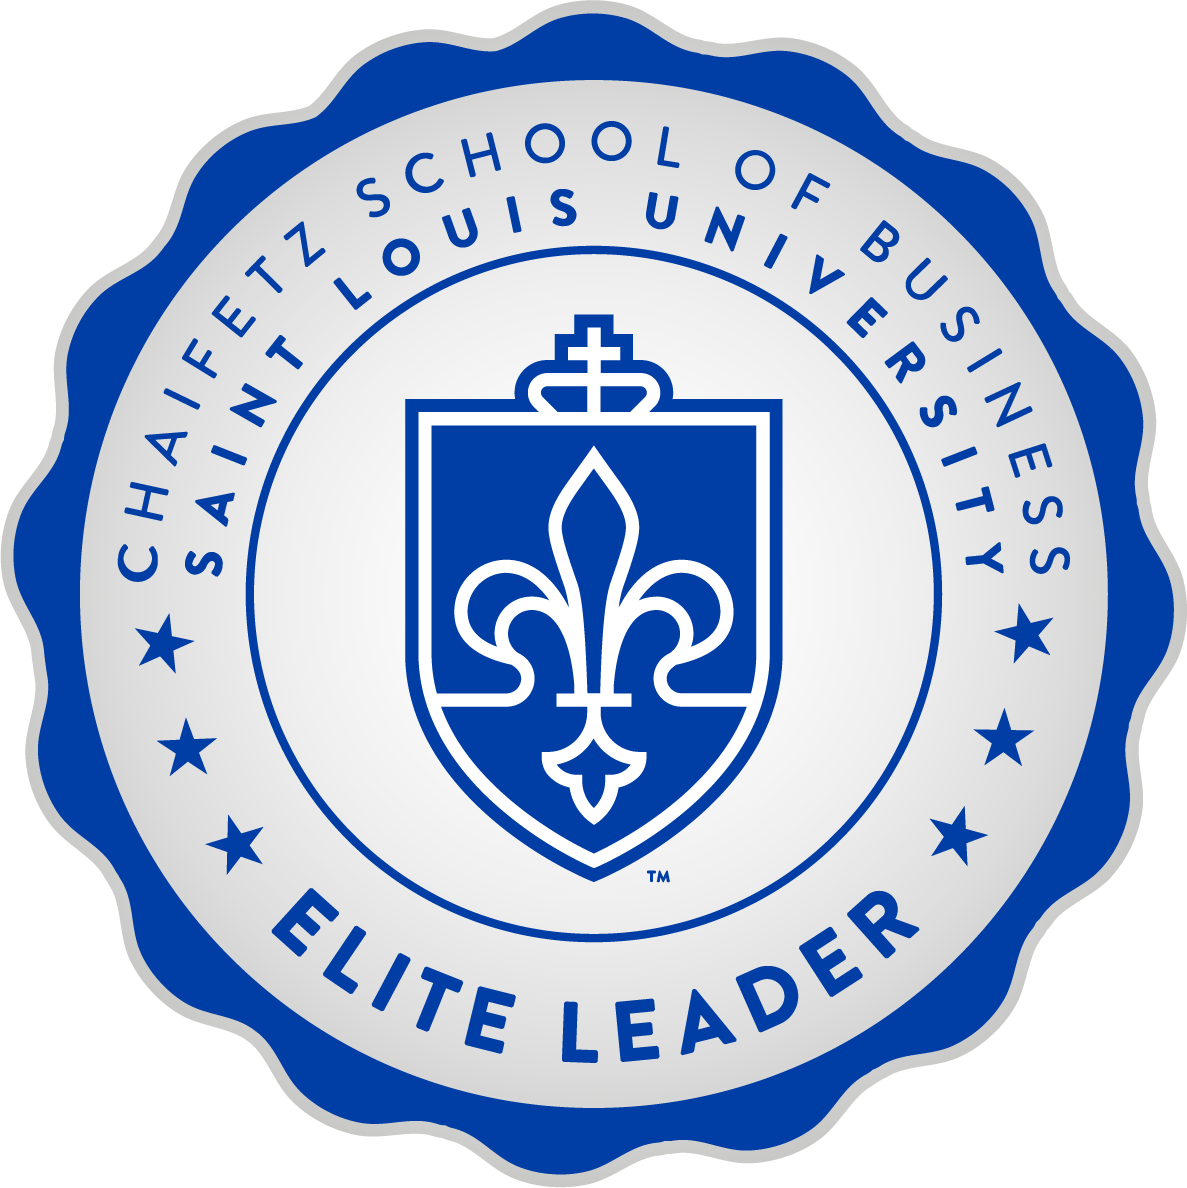 ELITE Leader Digital Badge Reading "Chaifetz School of Business Saint Louis University - ELITE Leader"